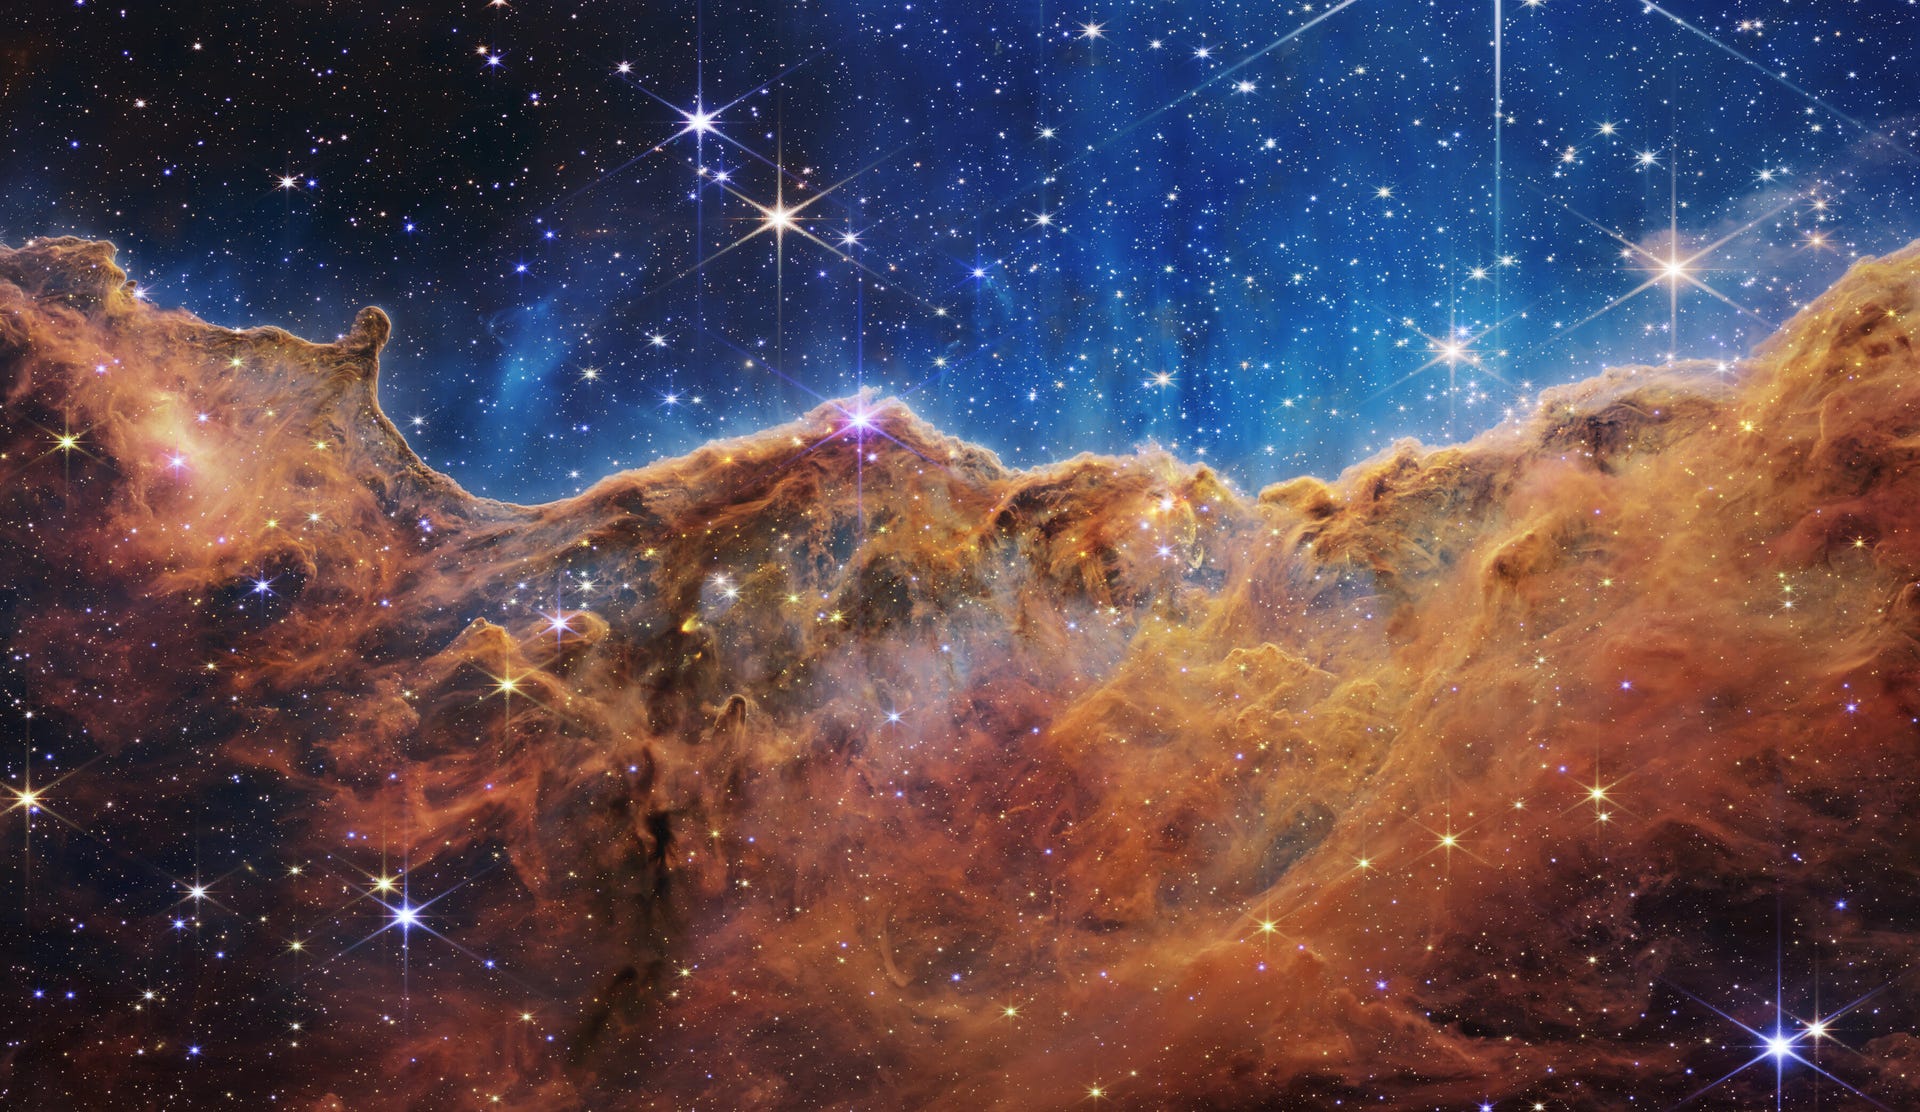 Carina Nebula: Stars sparkle against an indigo backdrop over rusty bronze gas clouds